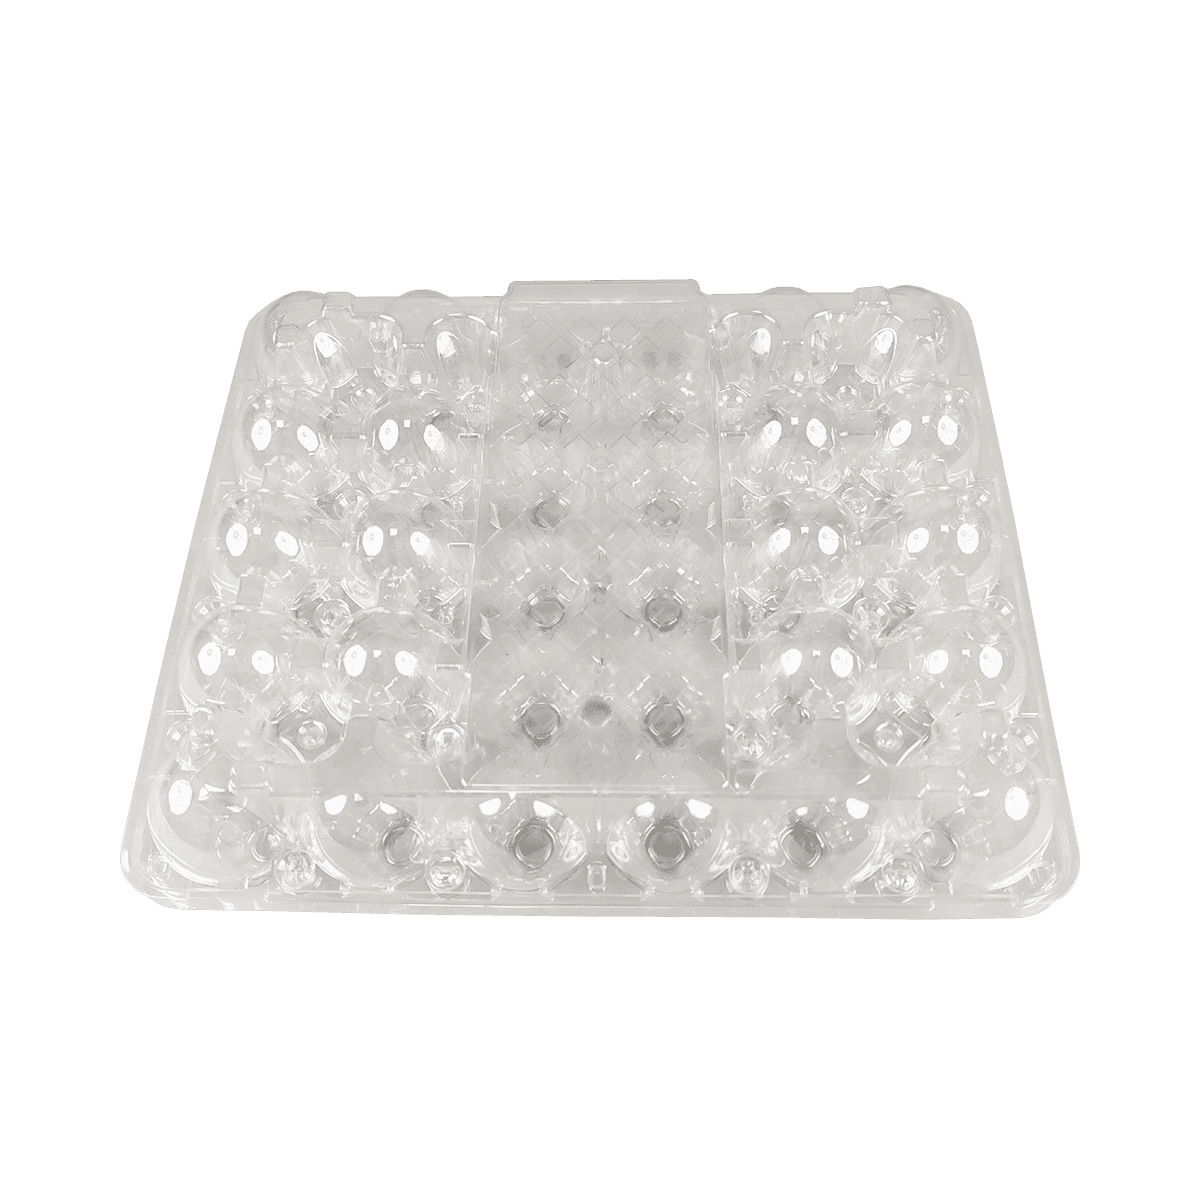 Convenient and safe storage of transparent PET 30 egg cartons